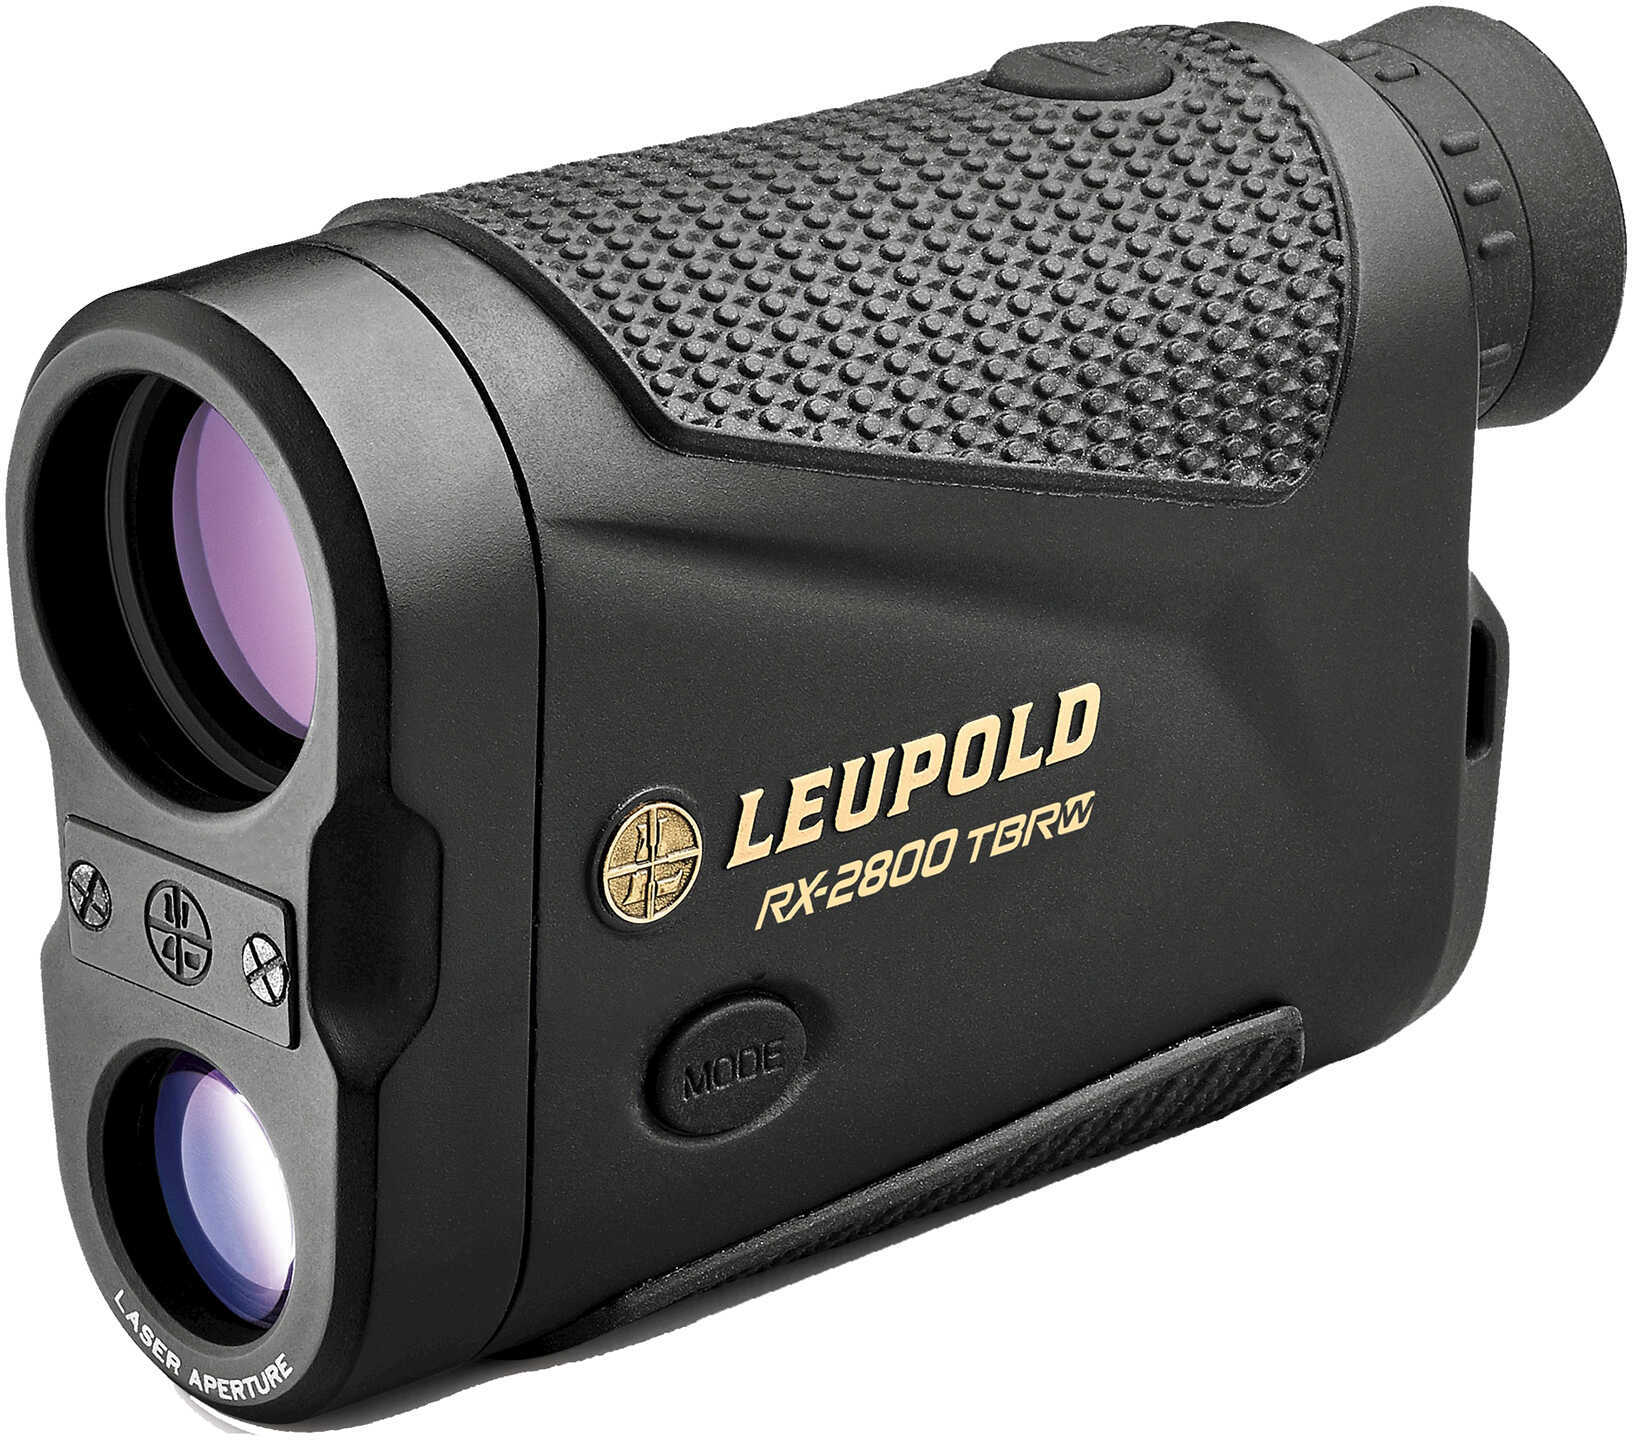 Leupold RX-2800 TBR/W with DNA Laser Rangefinder, 7x OLED Selectable, Black/Gray